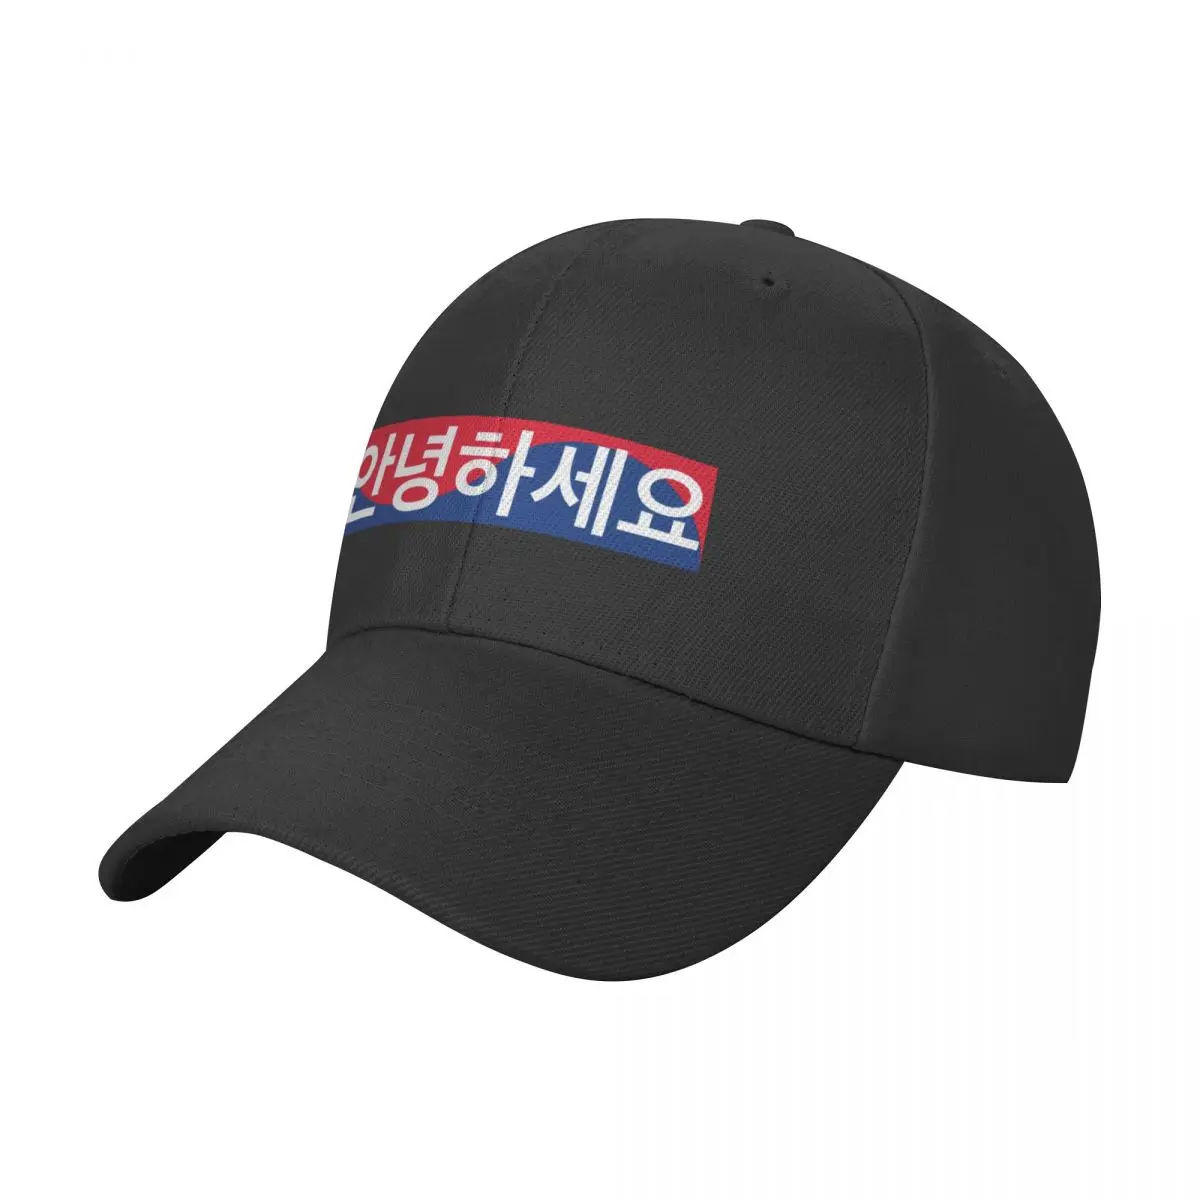 

Korean Hello Baseball Cap Snap Back Hat summer hat Men's Women's